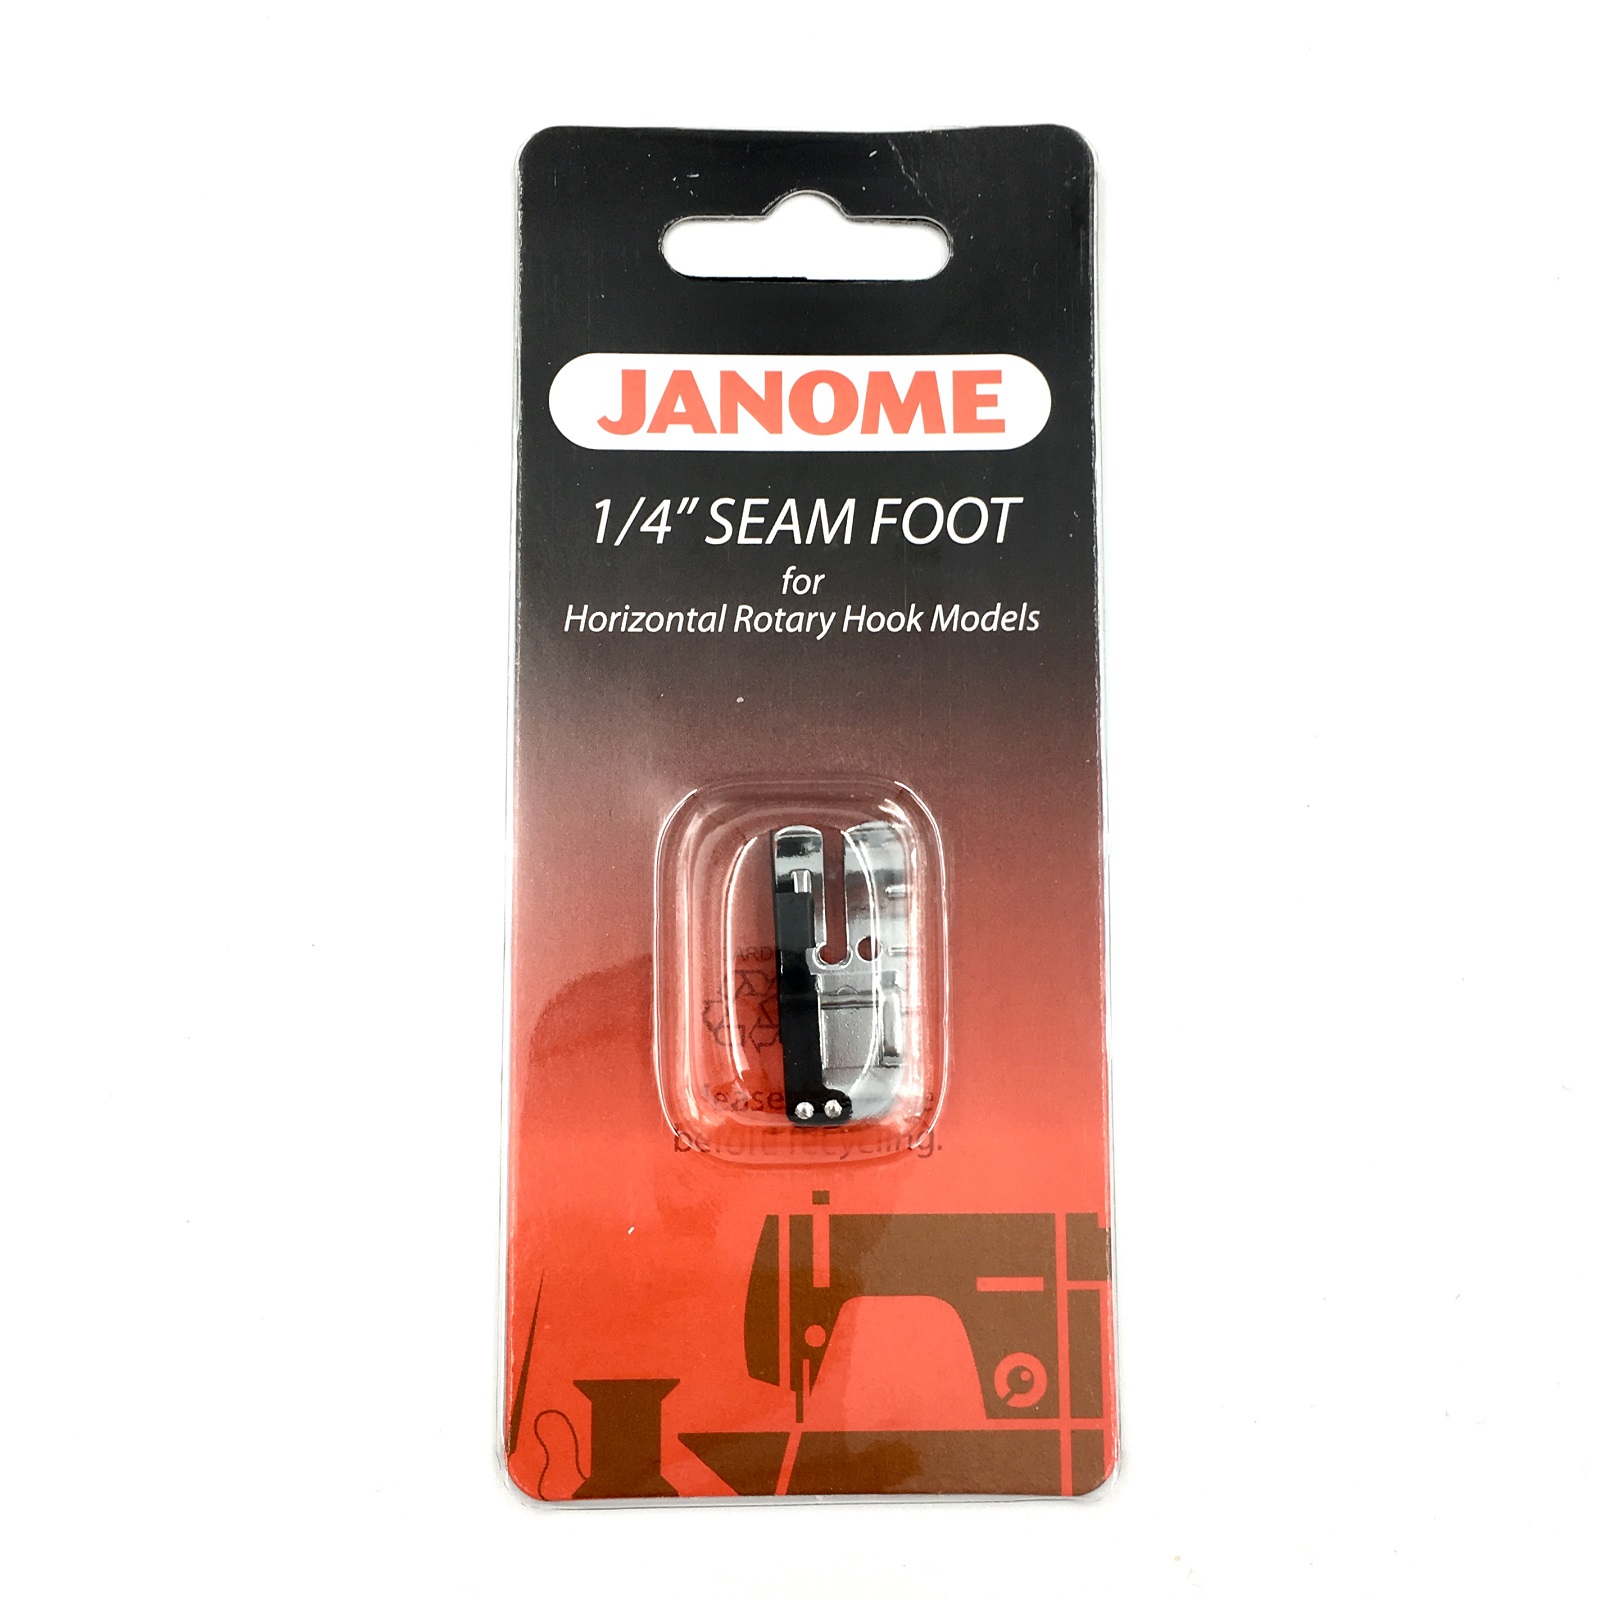 Janome 1/4 Seam Foot